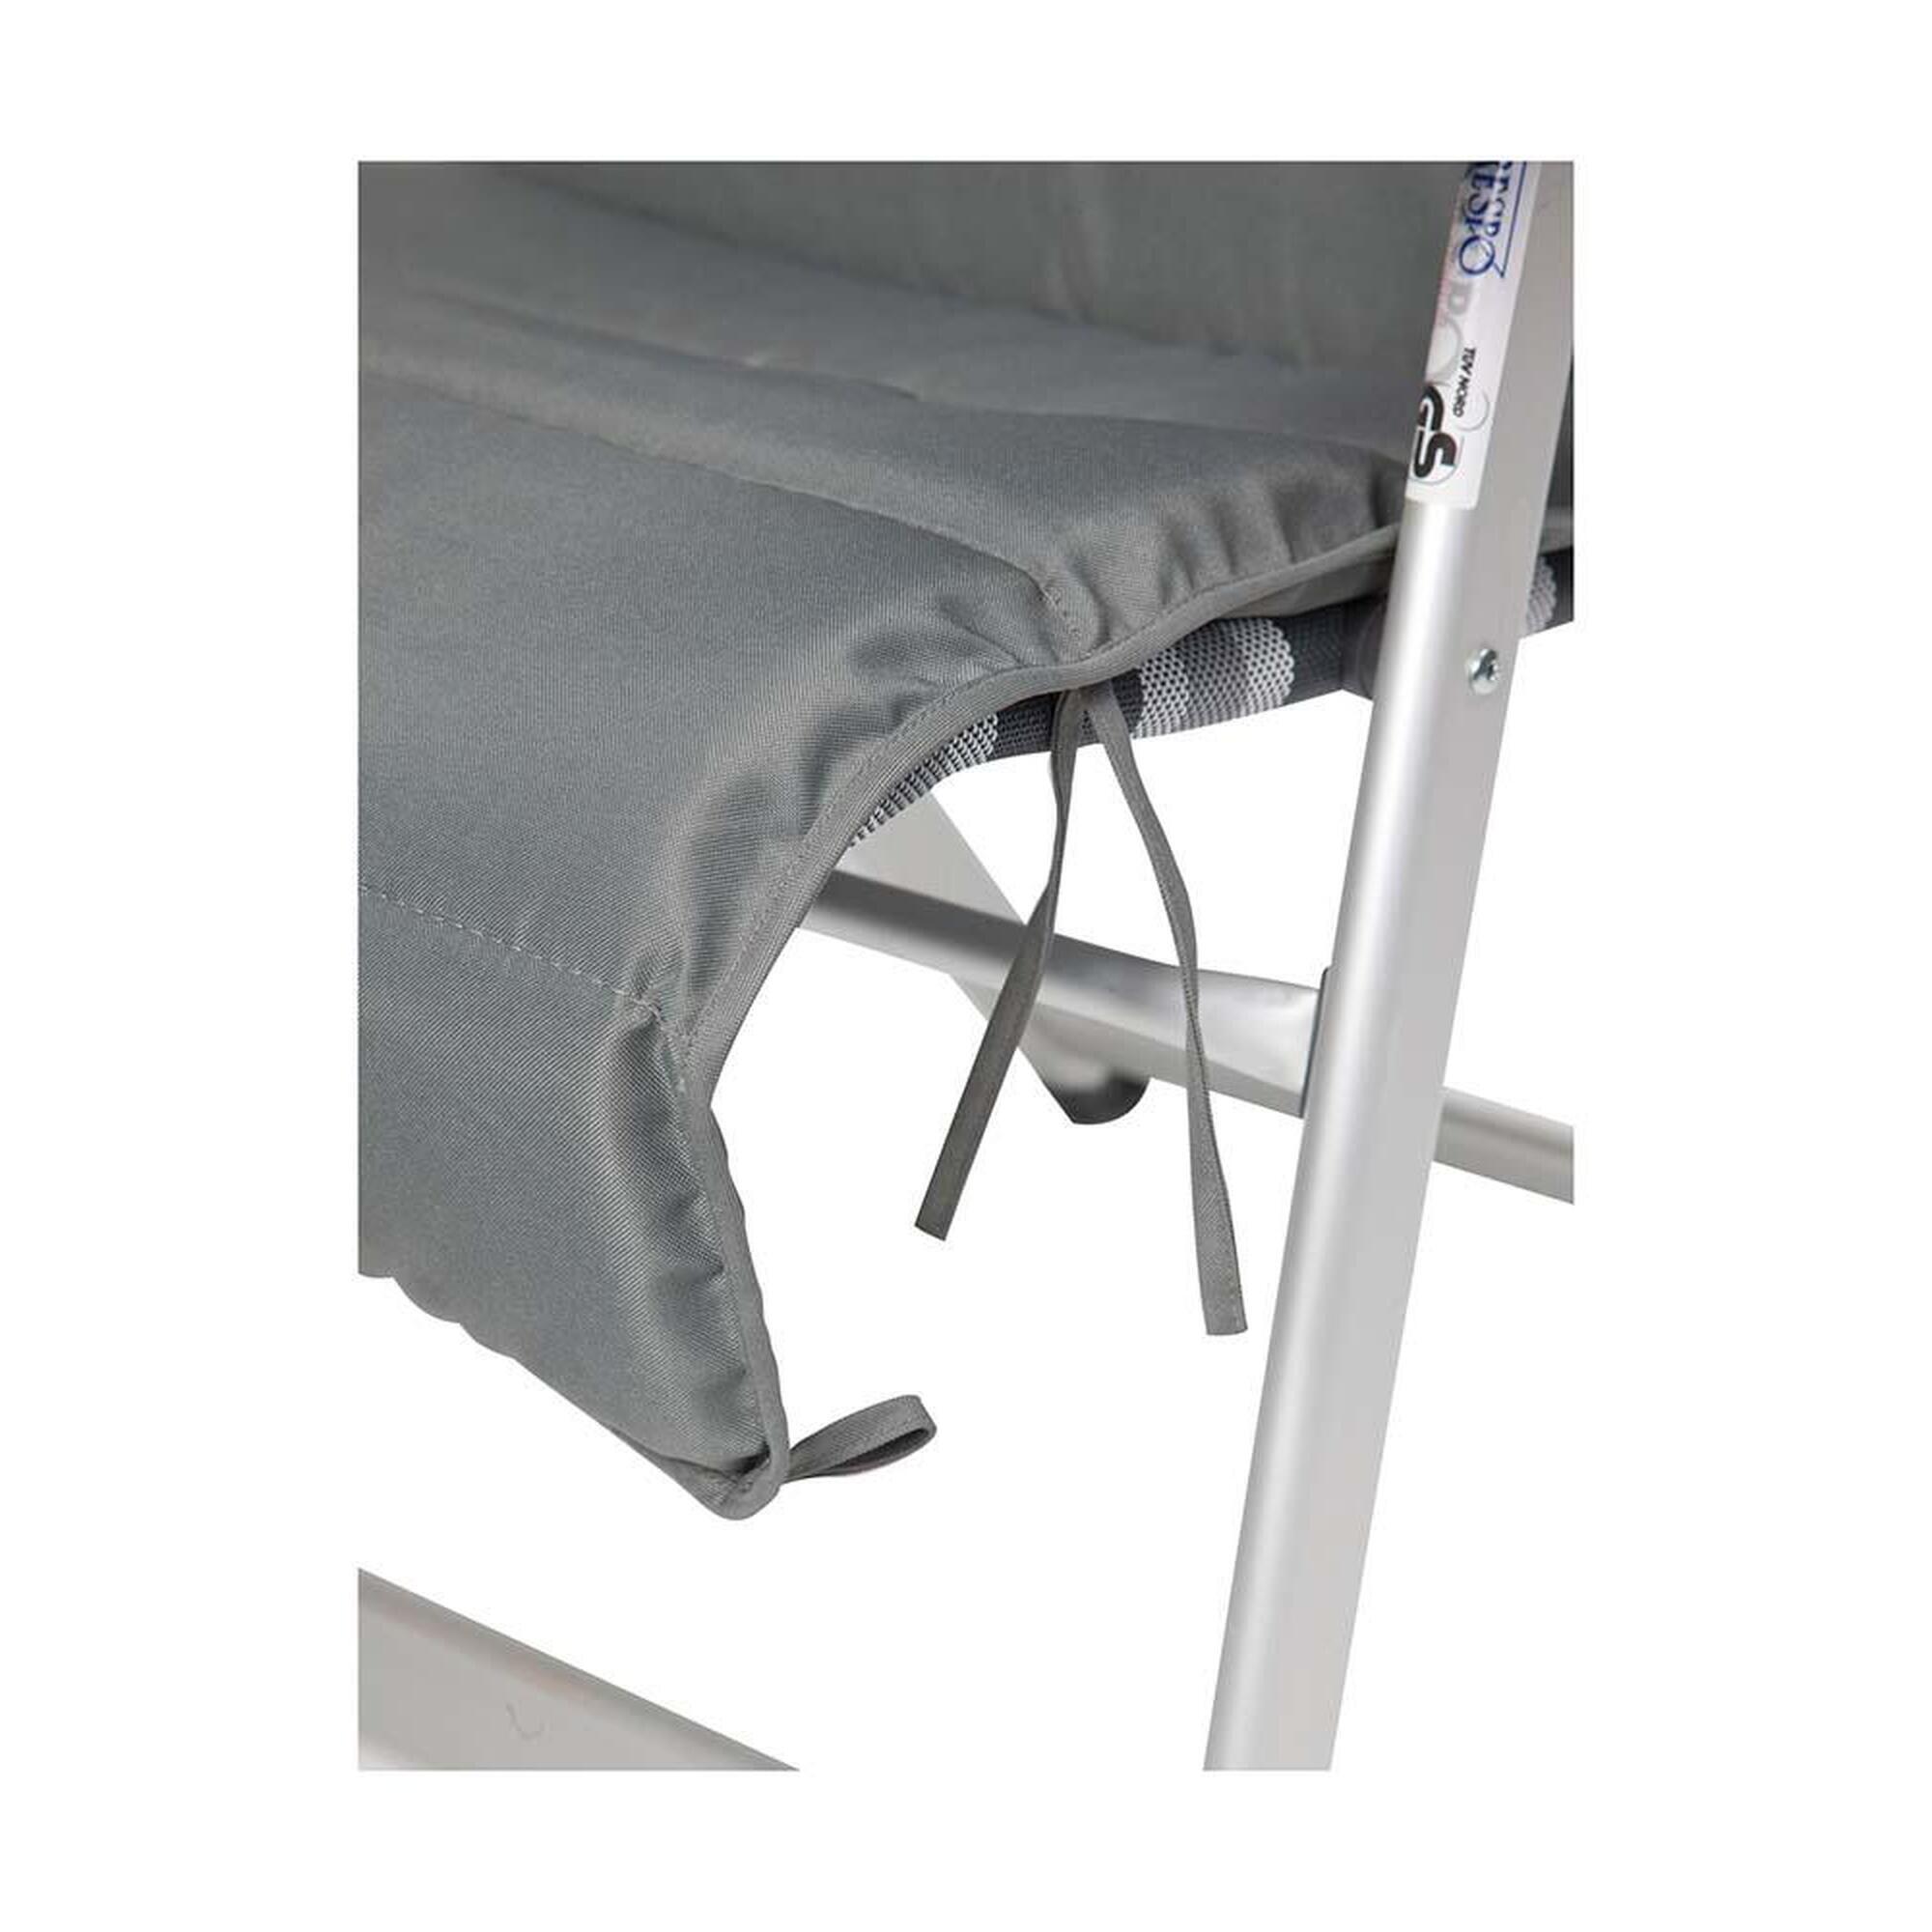 Bo-Camp - Cojín para silla - Universal - Acolchado - Poliéster - Gris